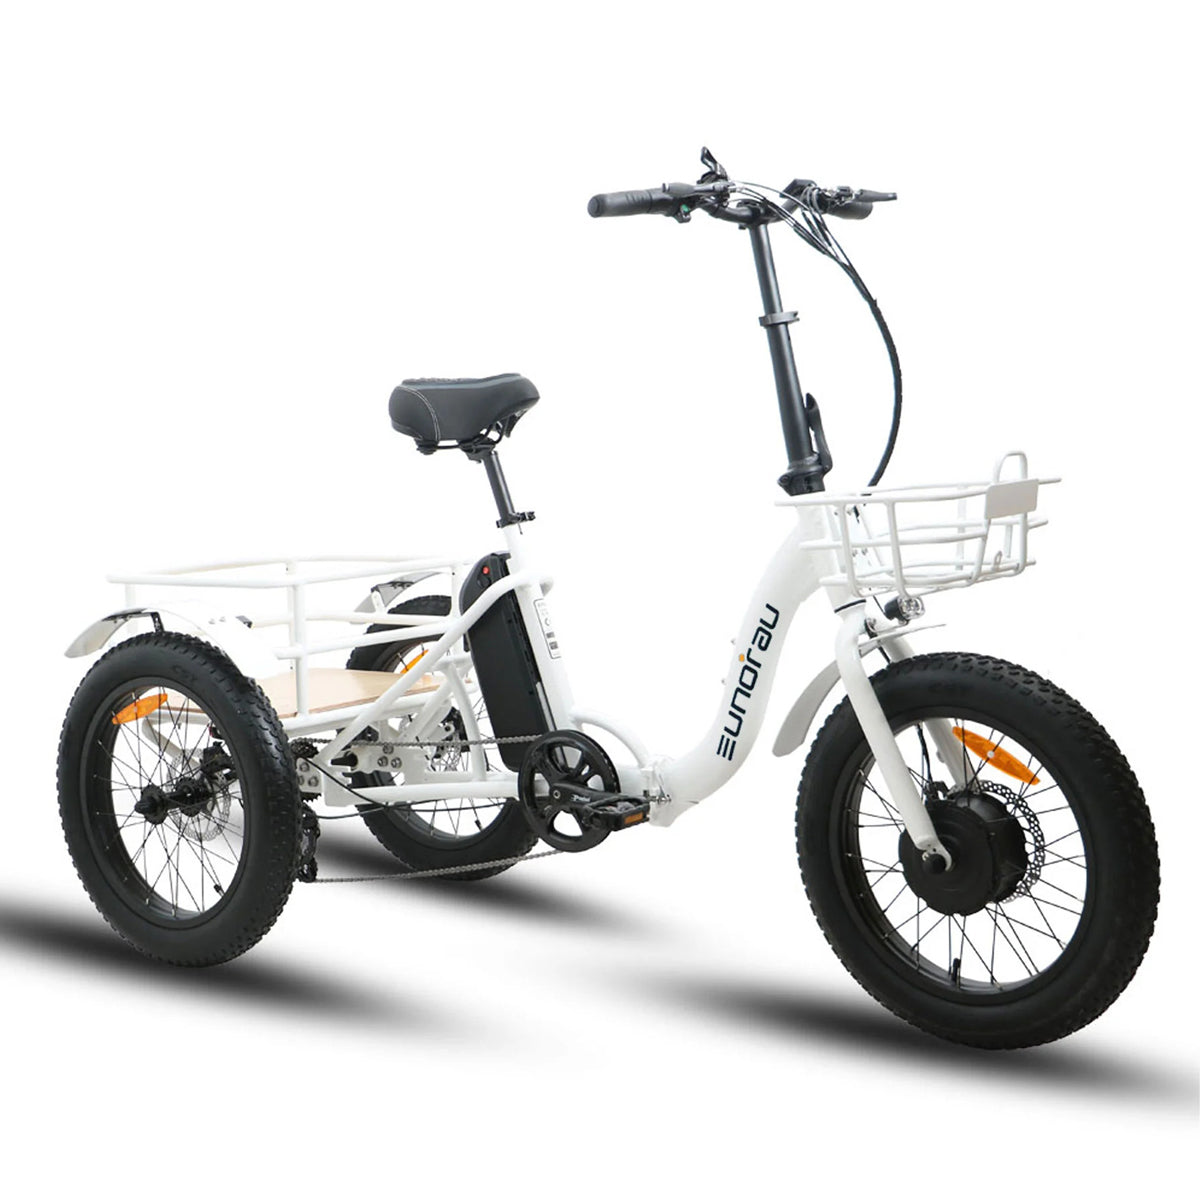 Eunorau 750 watt peak Trike, 440 LBS weight capacity